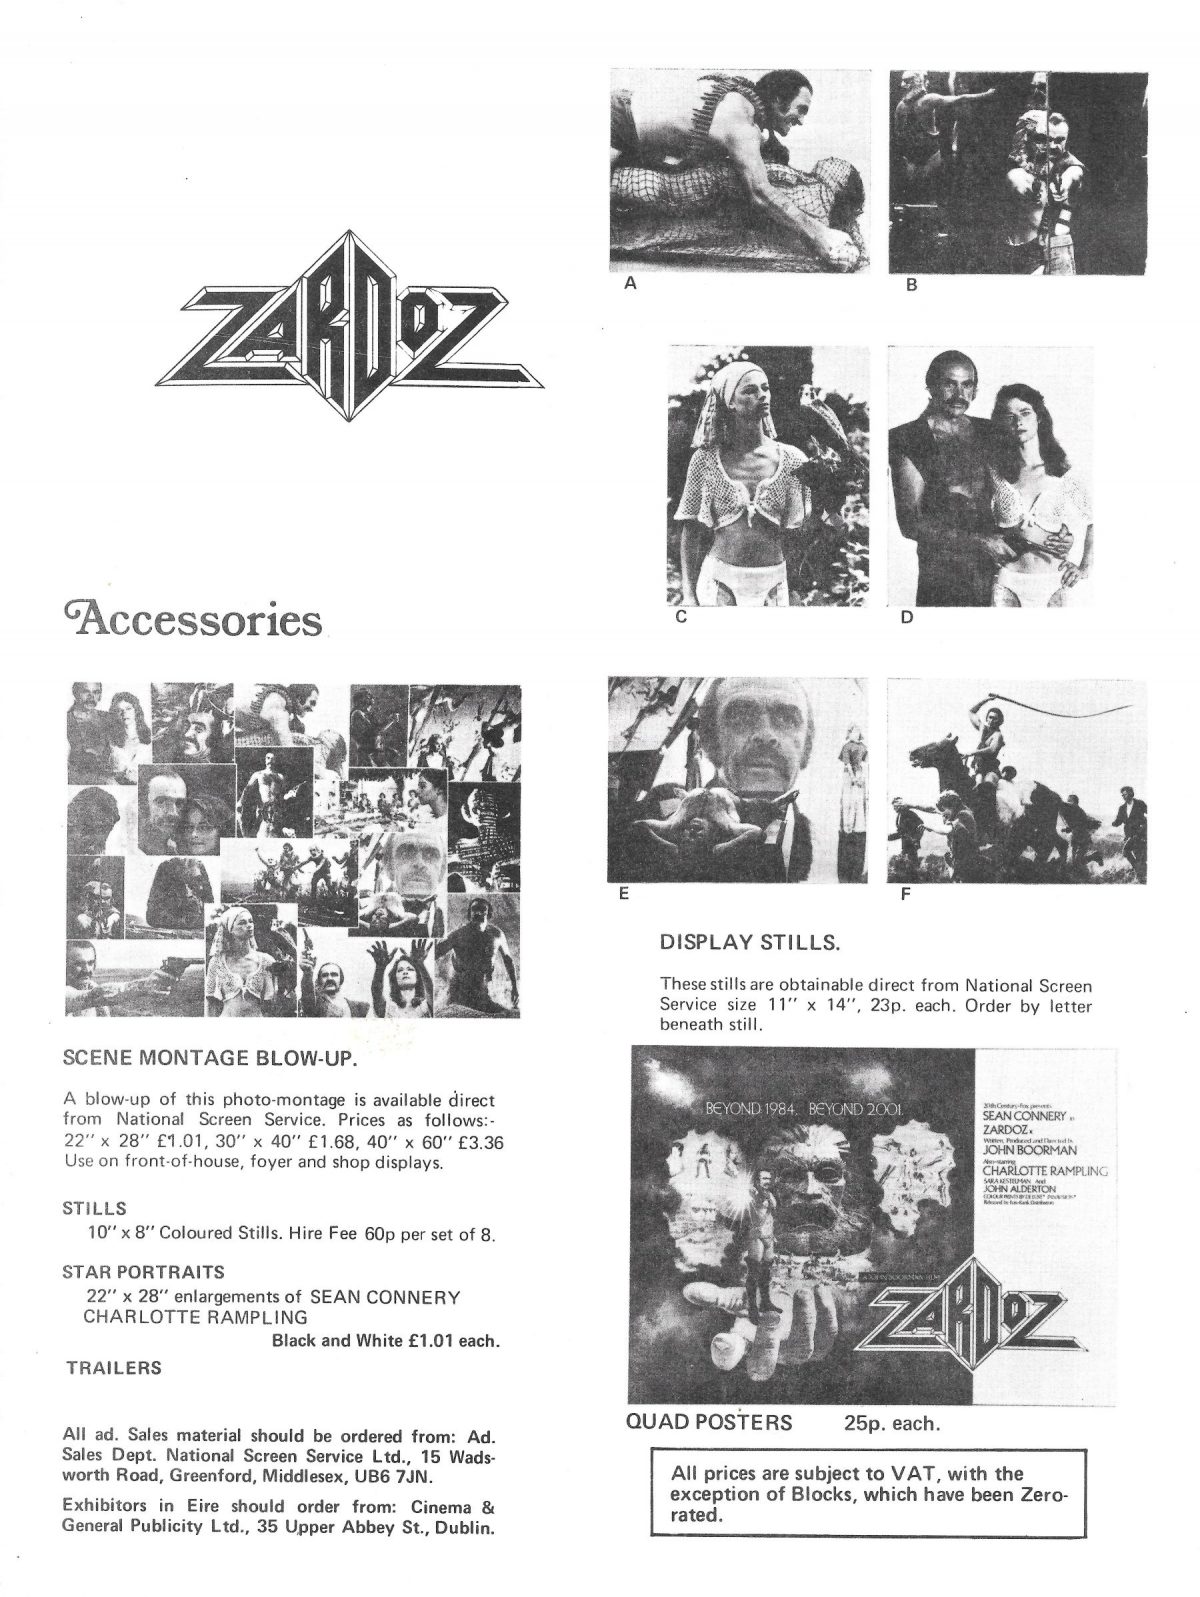 John Boorman, Zardoz, Sean Connery, Charlotte Rampling, film, 1974, sci-fi, cult films, press pack